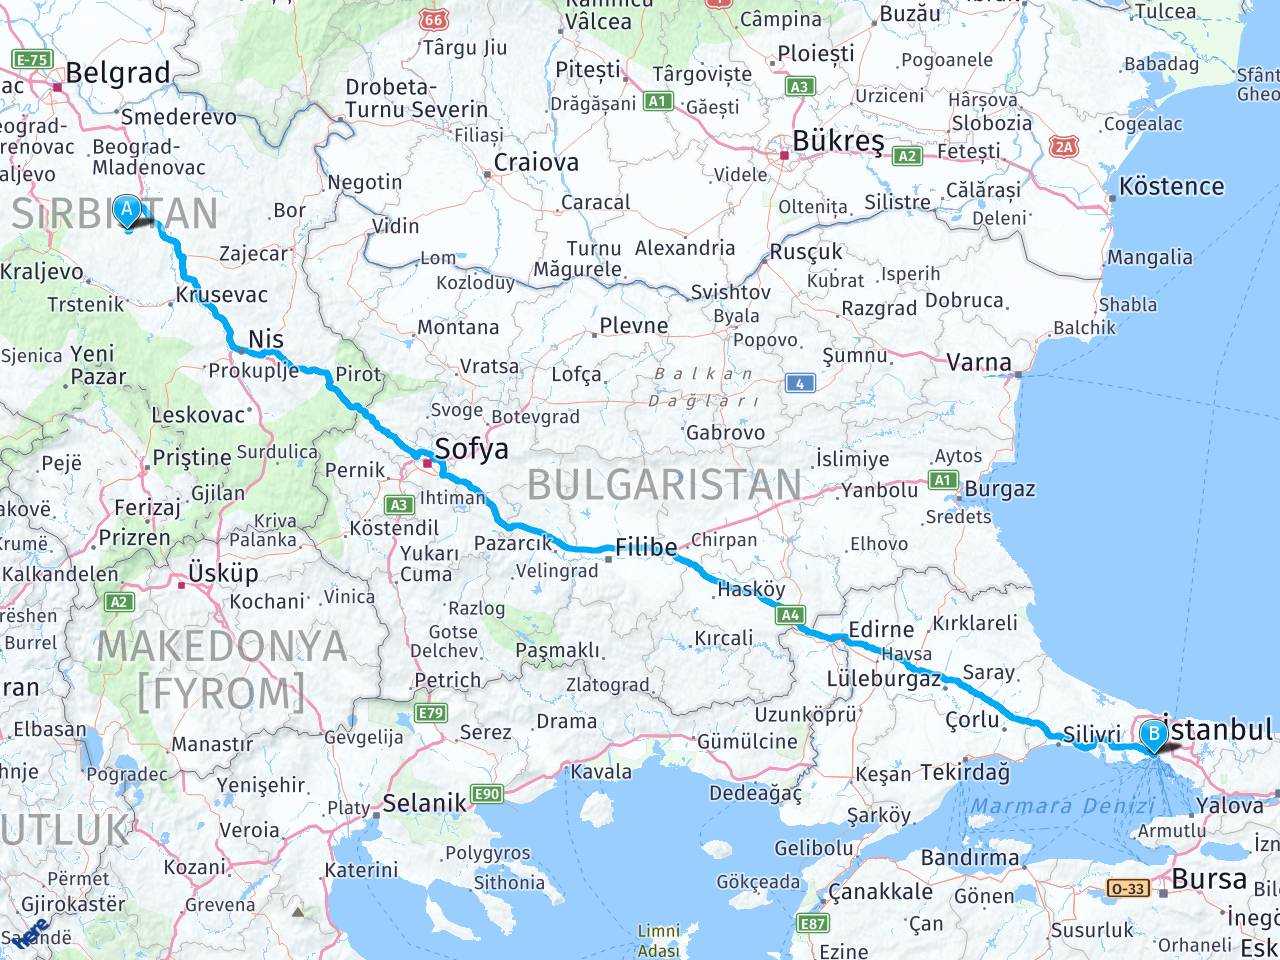 sirbistan istanbul arasi mesafe sirbistan istanbul yol haritasi sirbistan istanbul kac saat kac km